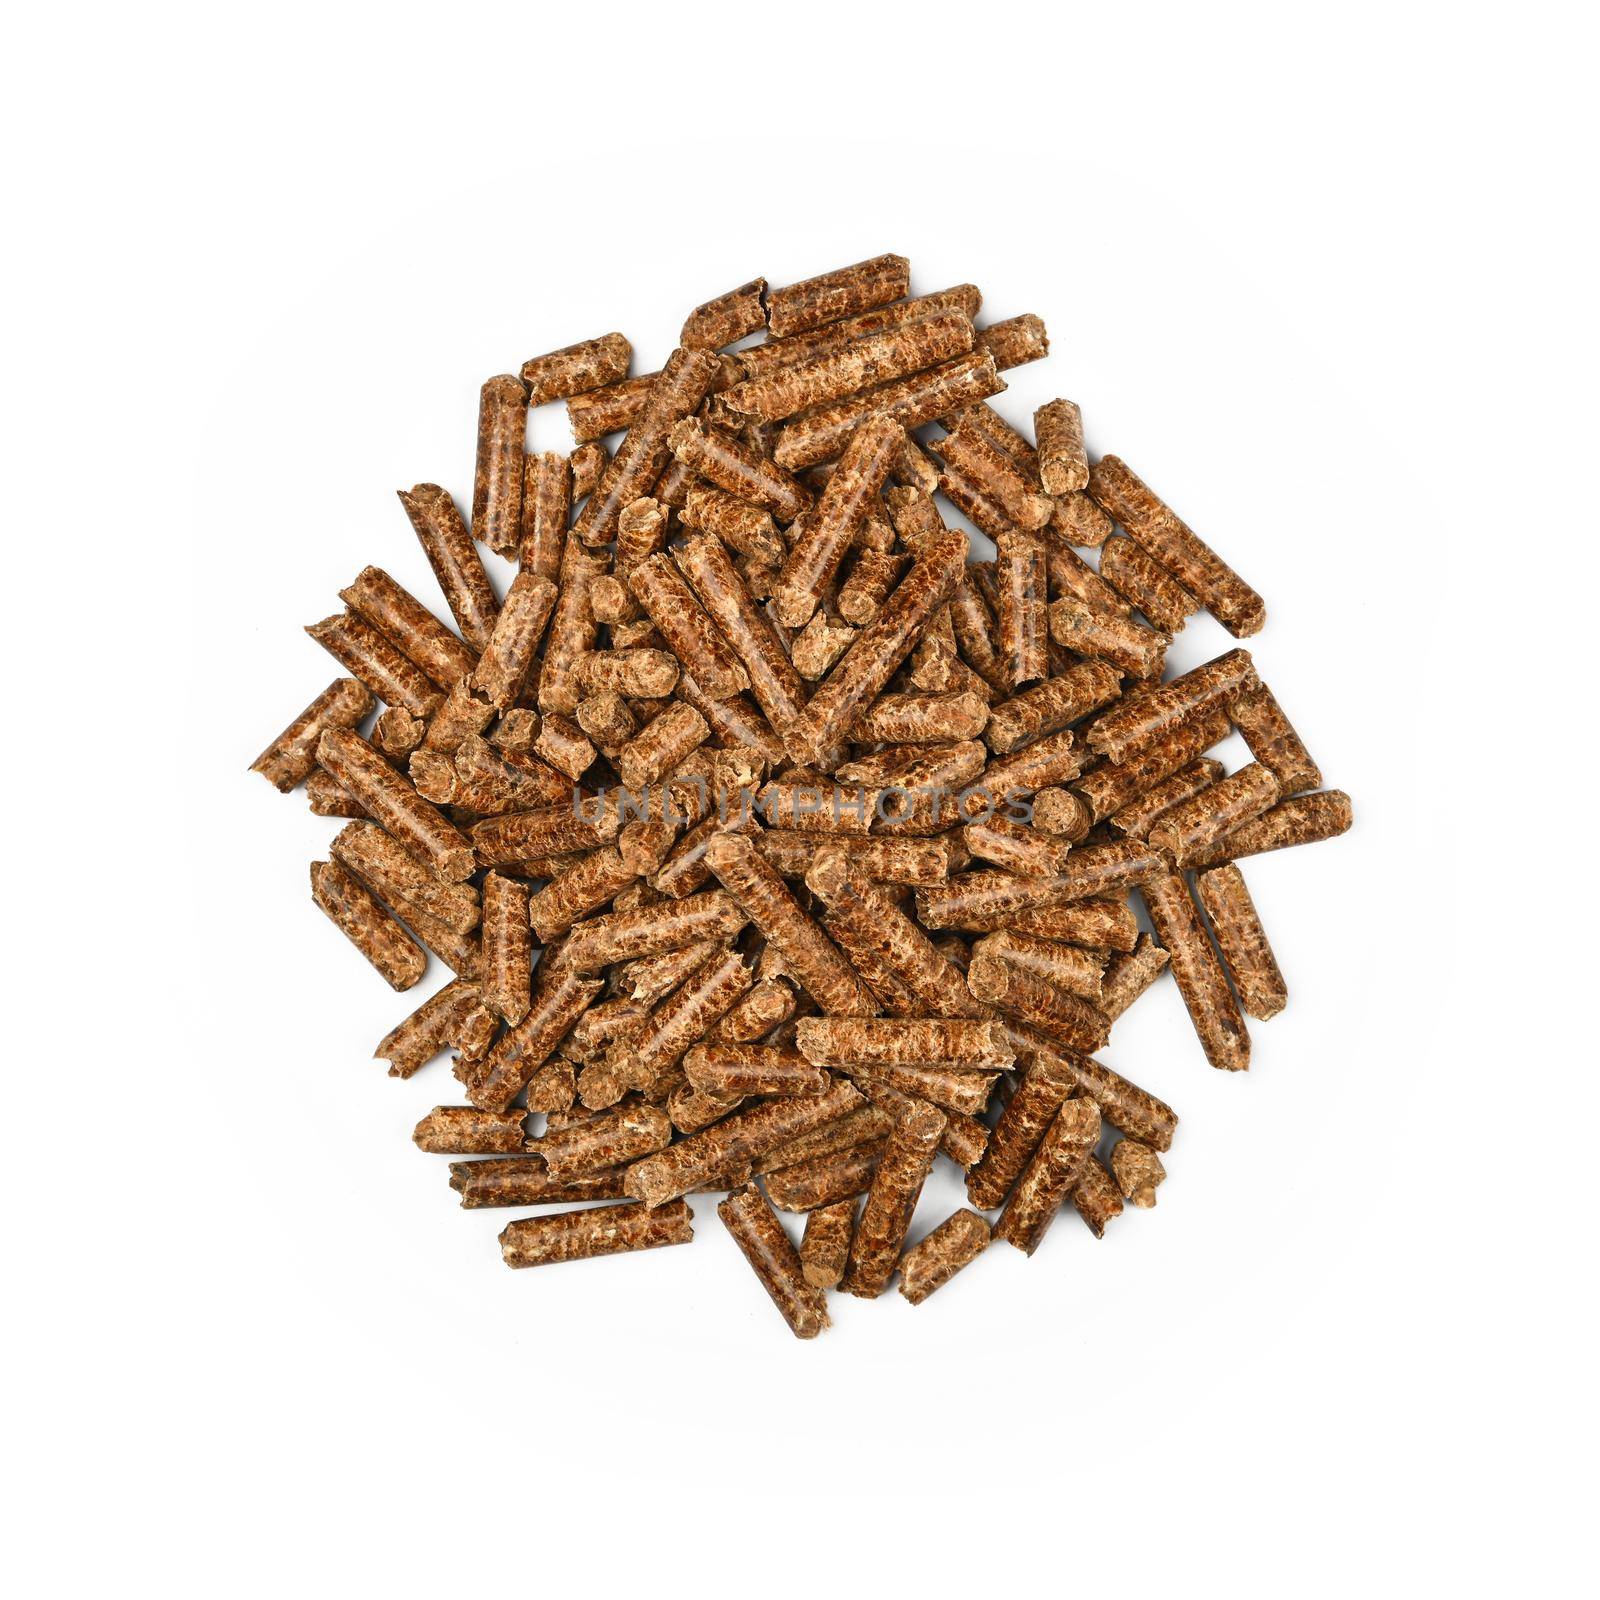 Heap of hardwood pellets for food smoking on white by BreakingTheWalls